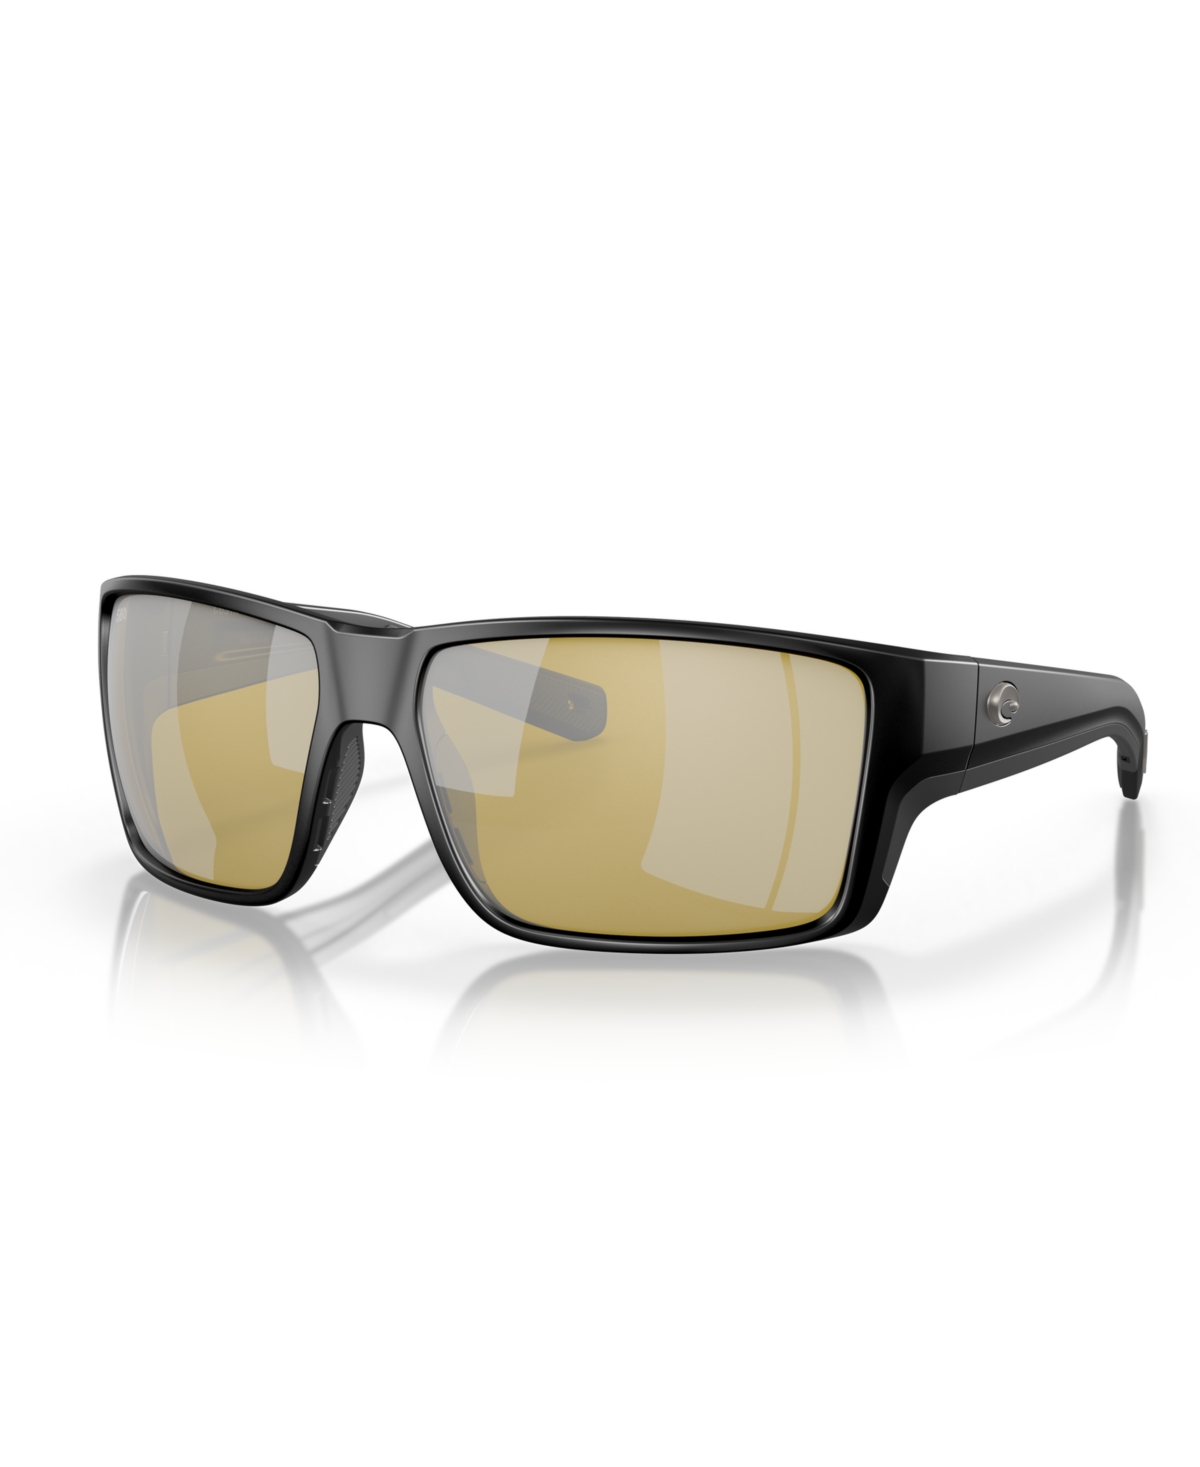 Men's Polarized Sunglasses, Reefton Pro 6S9080 - Matte Black, Gray